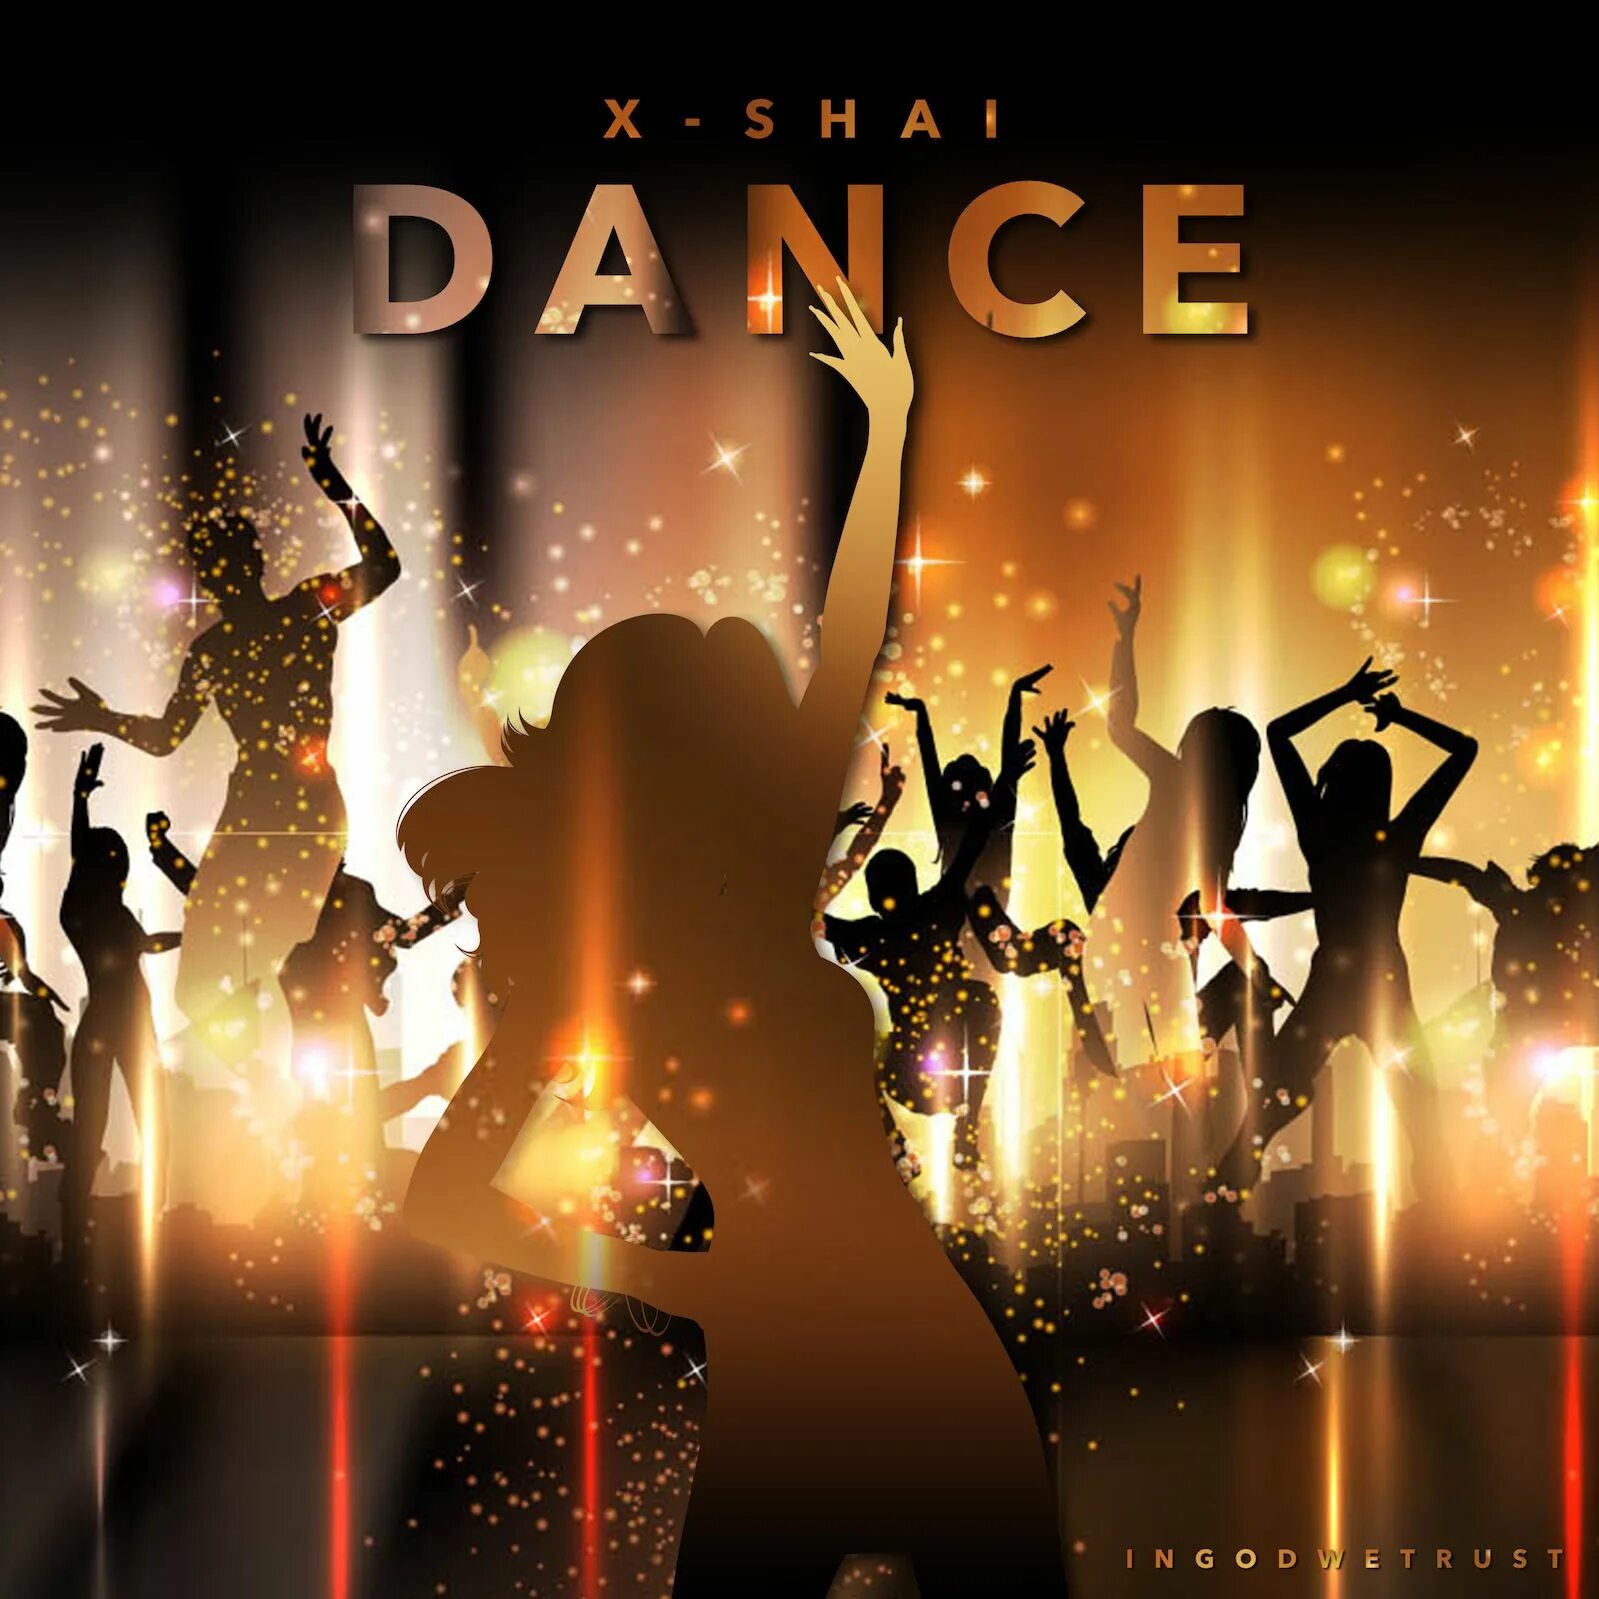 Dance обложка. Танцы обложка. Обложка танцевальной группы. Танцевальная музыка обложка. Обложка для танцевального альбома.